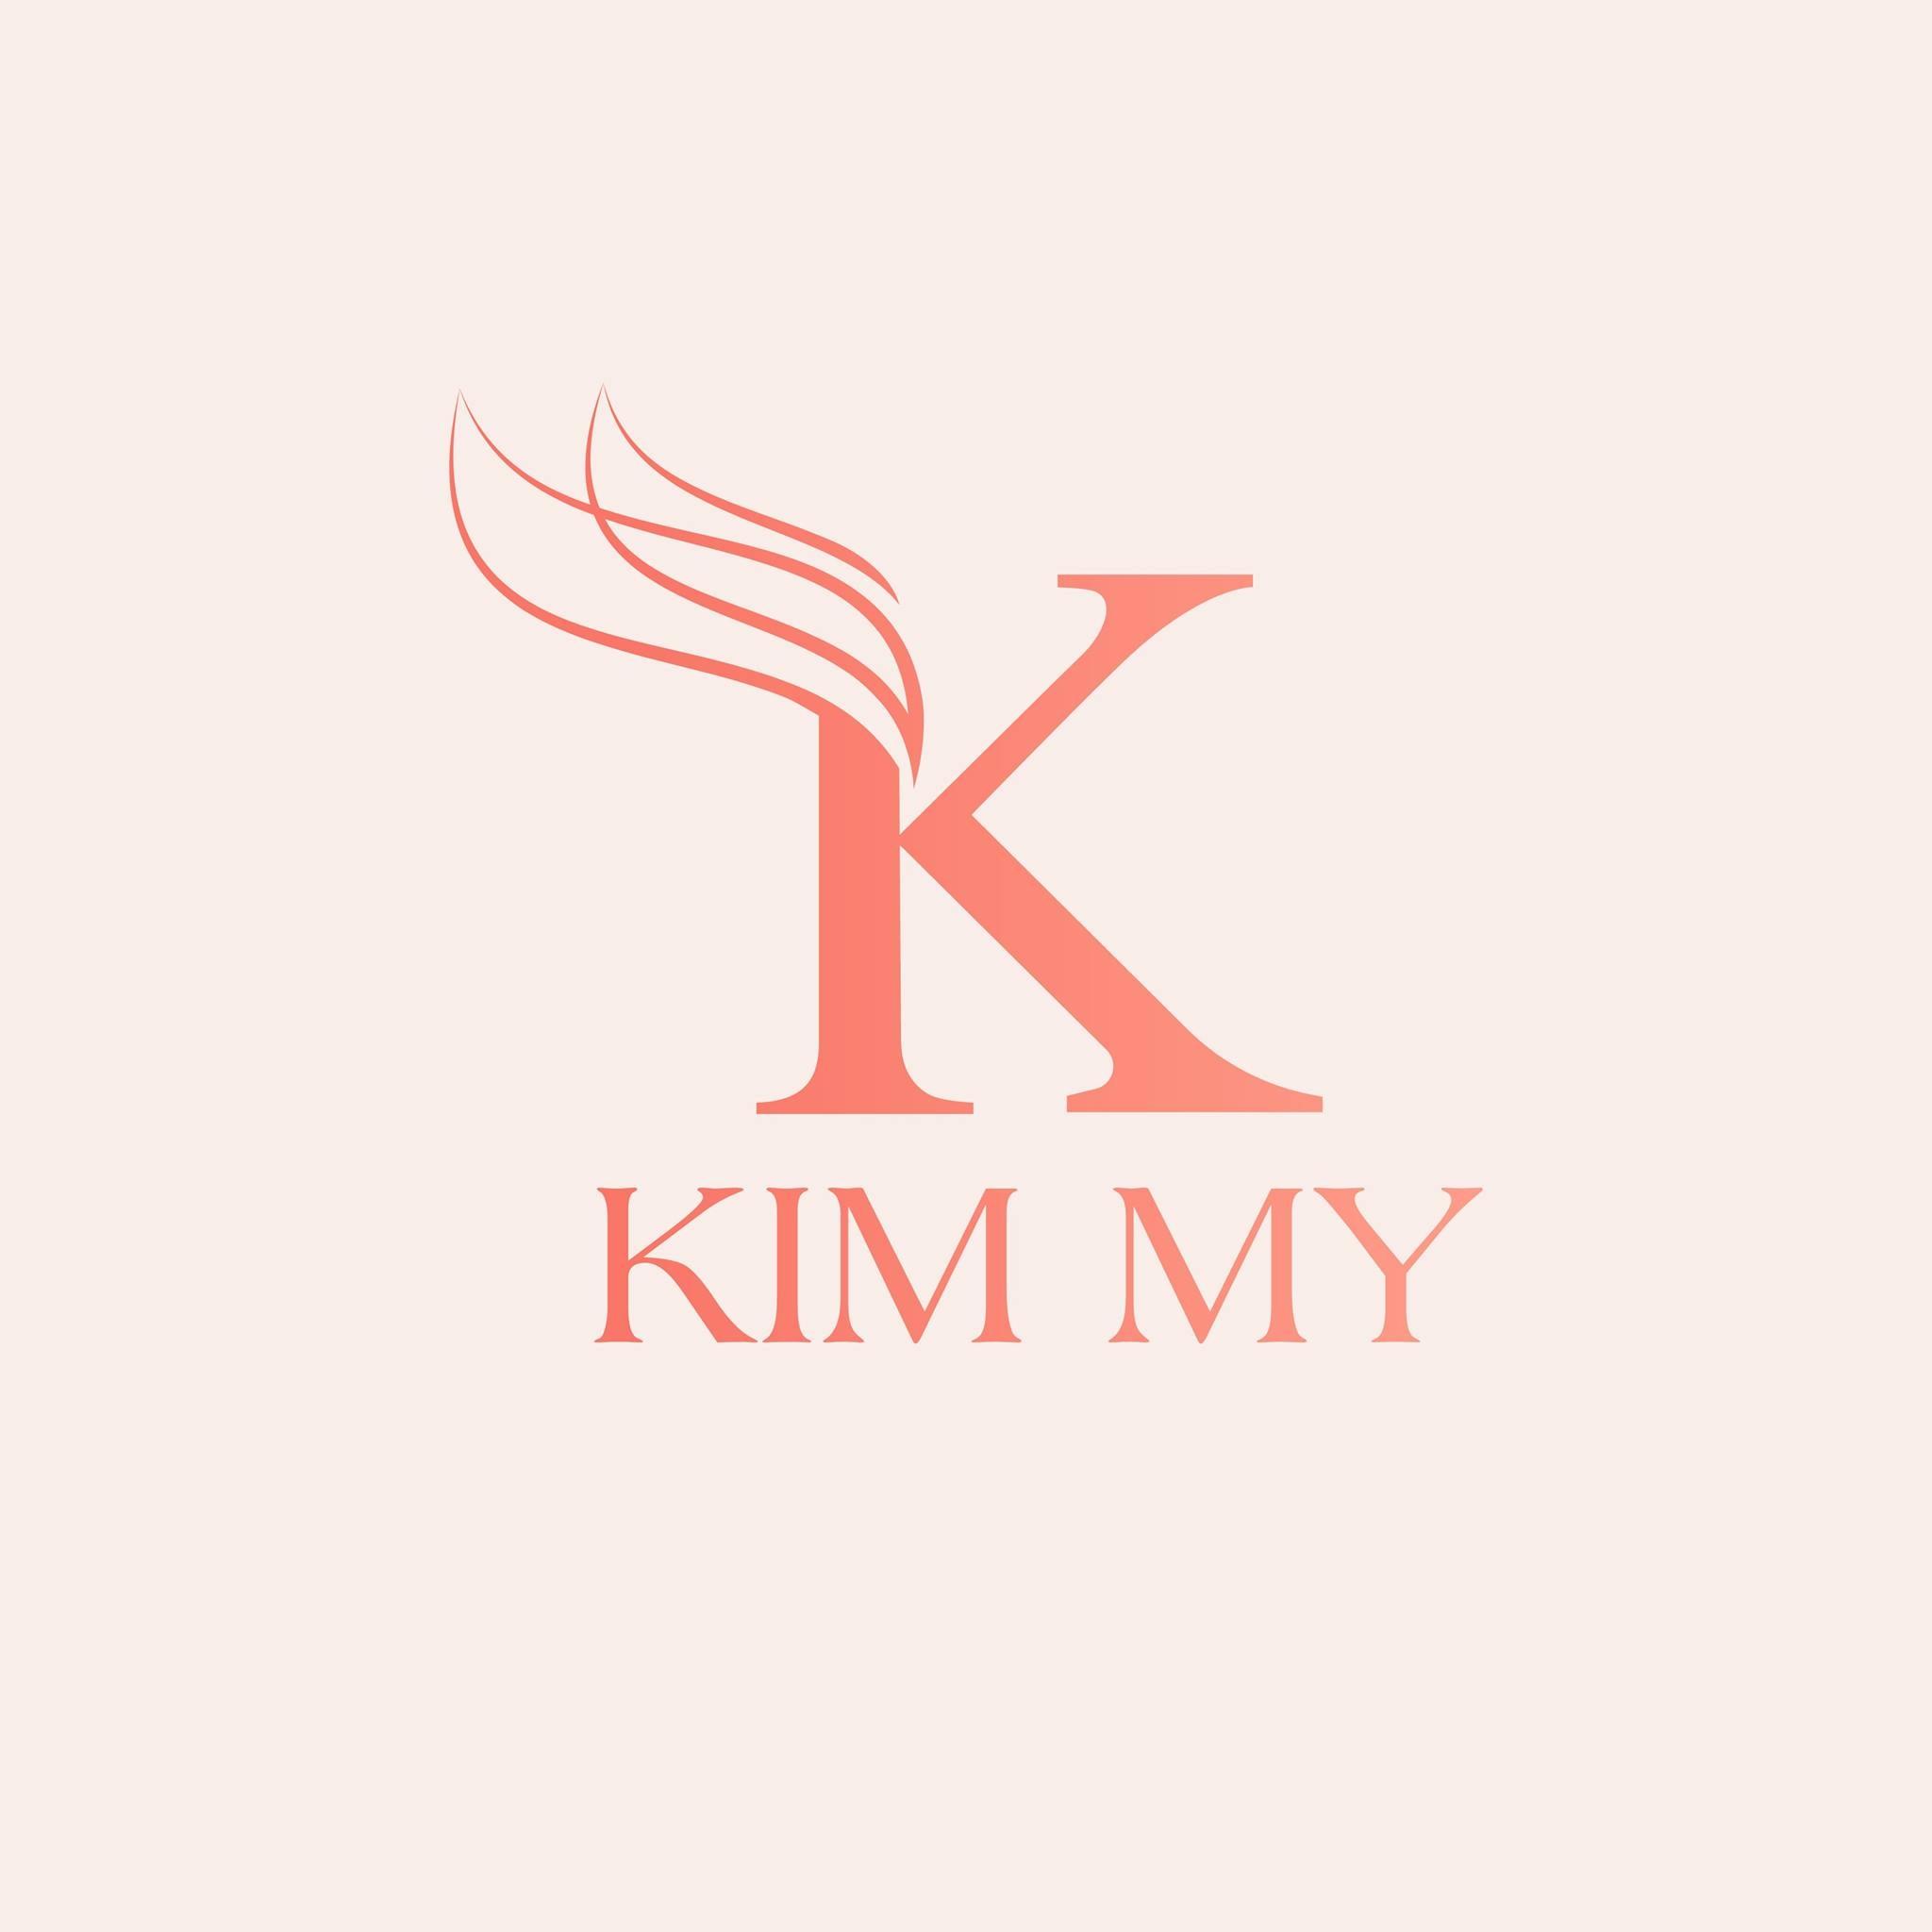 Kimmy Group